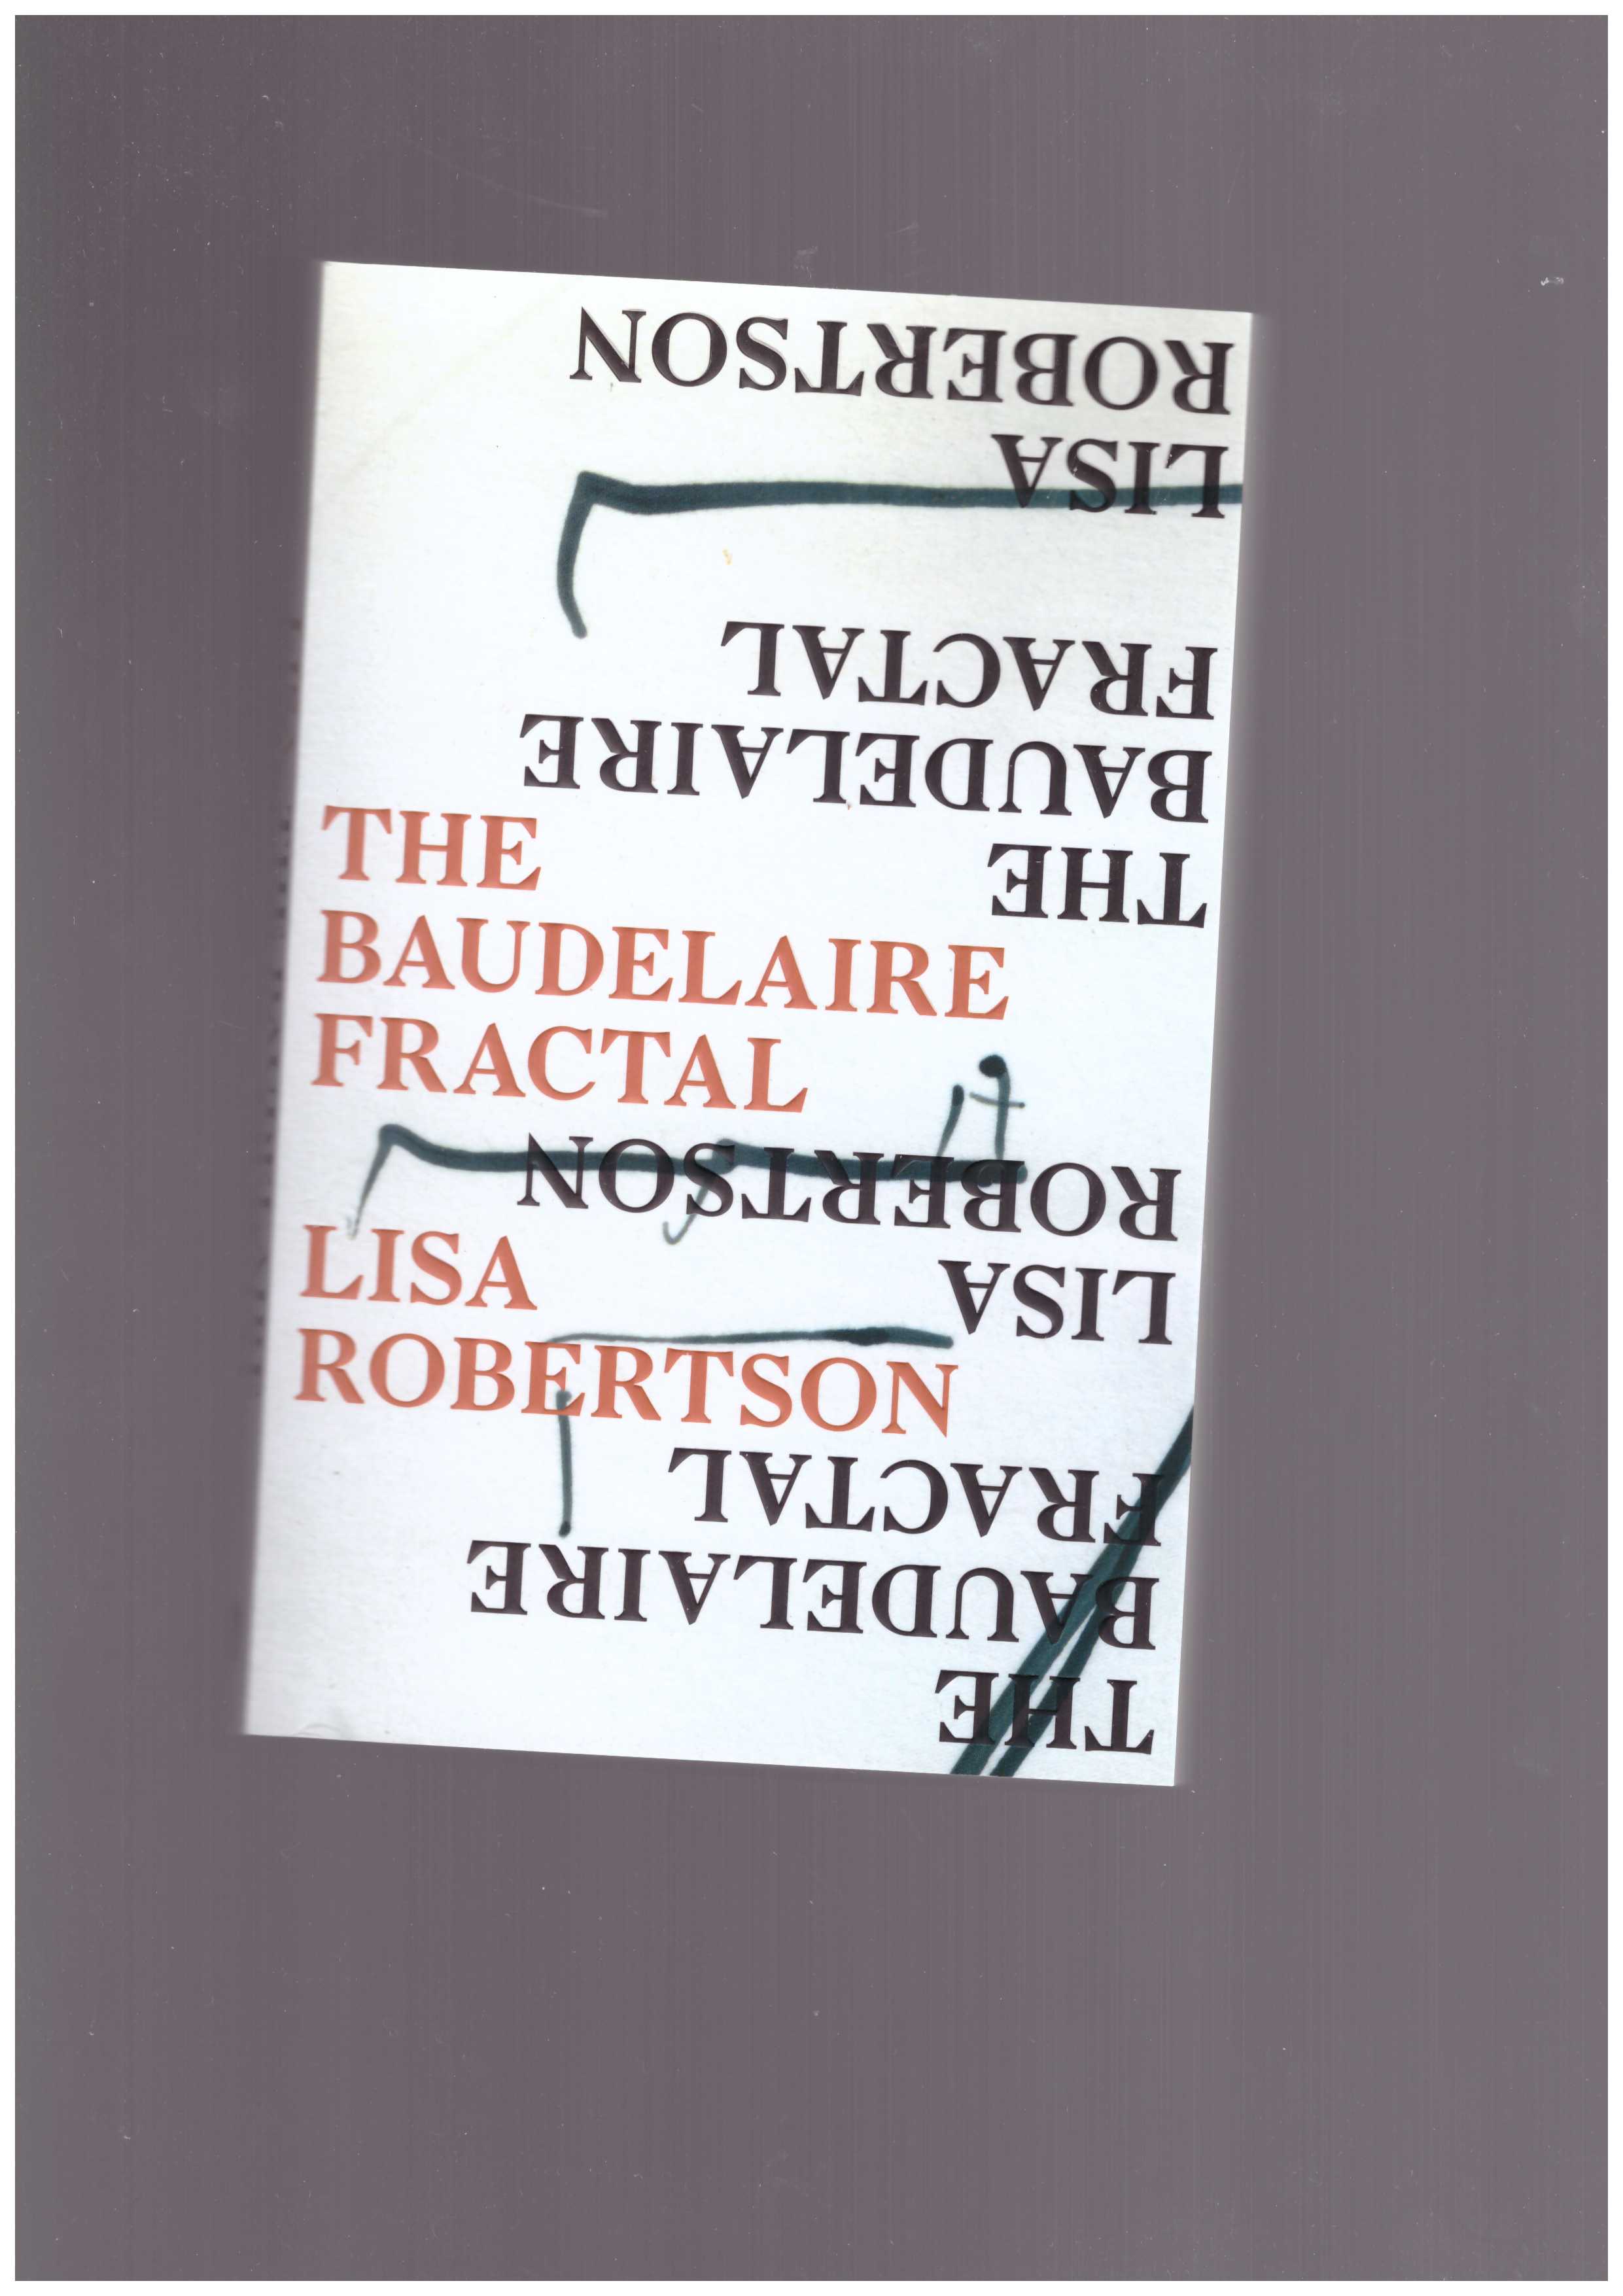 ROBERTSON, Lisa - The Baudelaire Fractal